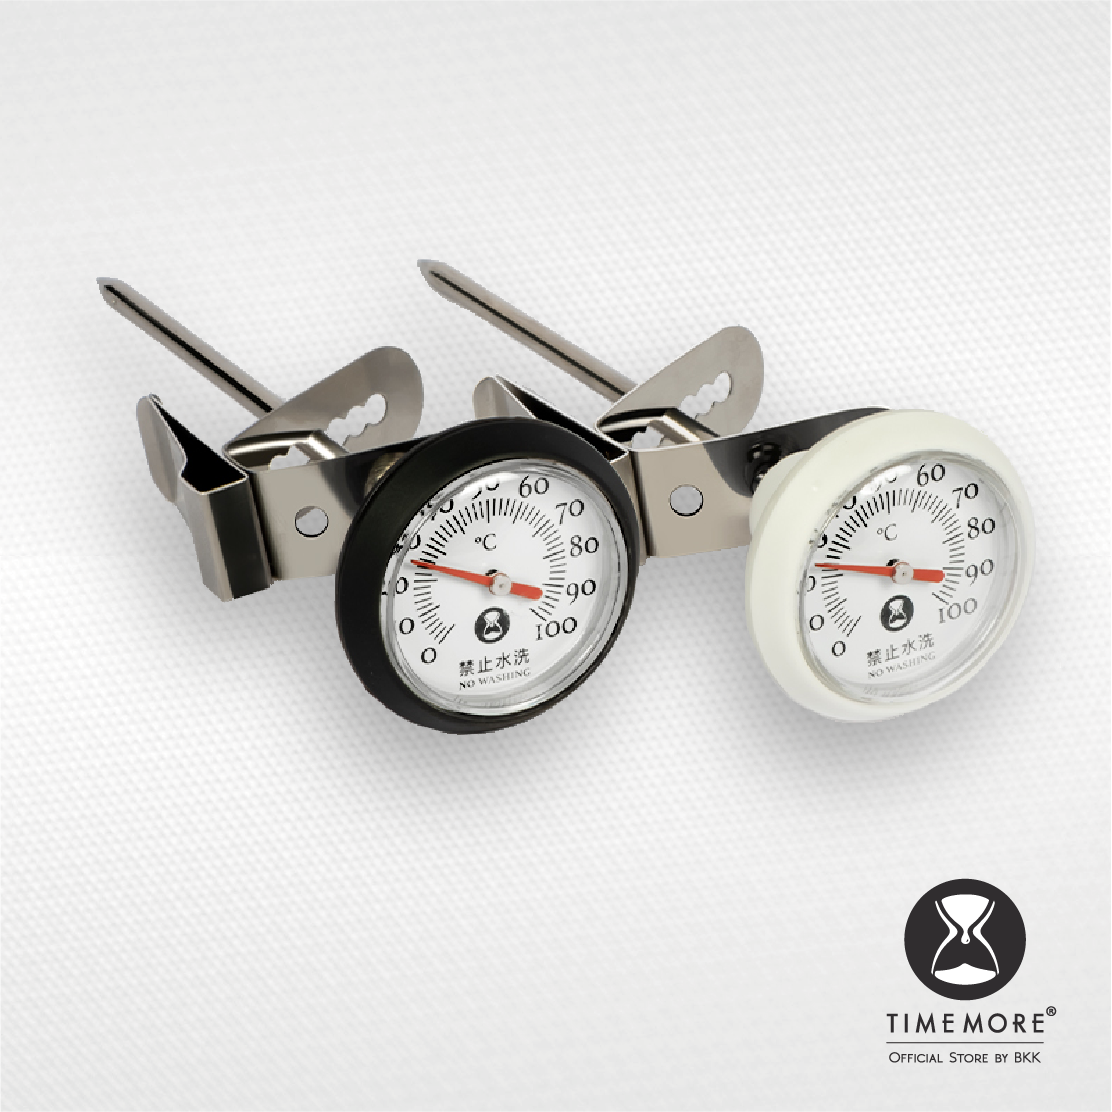 Timemore Thermometer (ก้านวัดอุณหภูมิ)